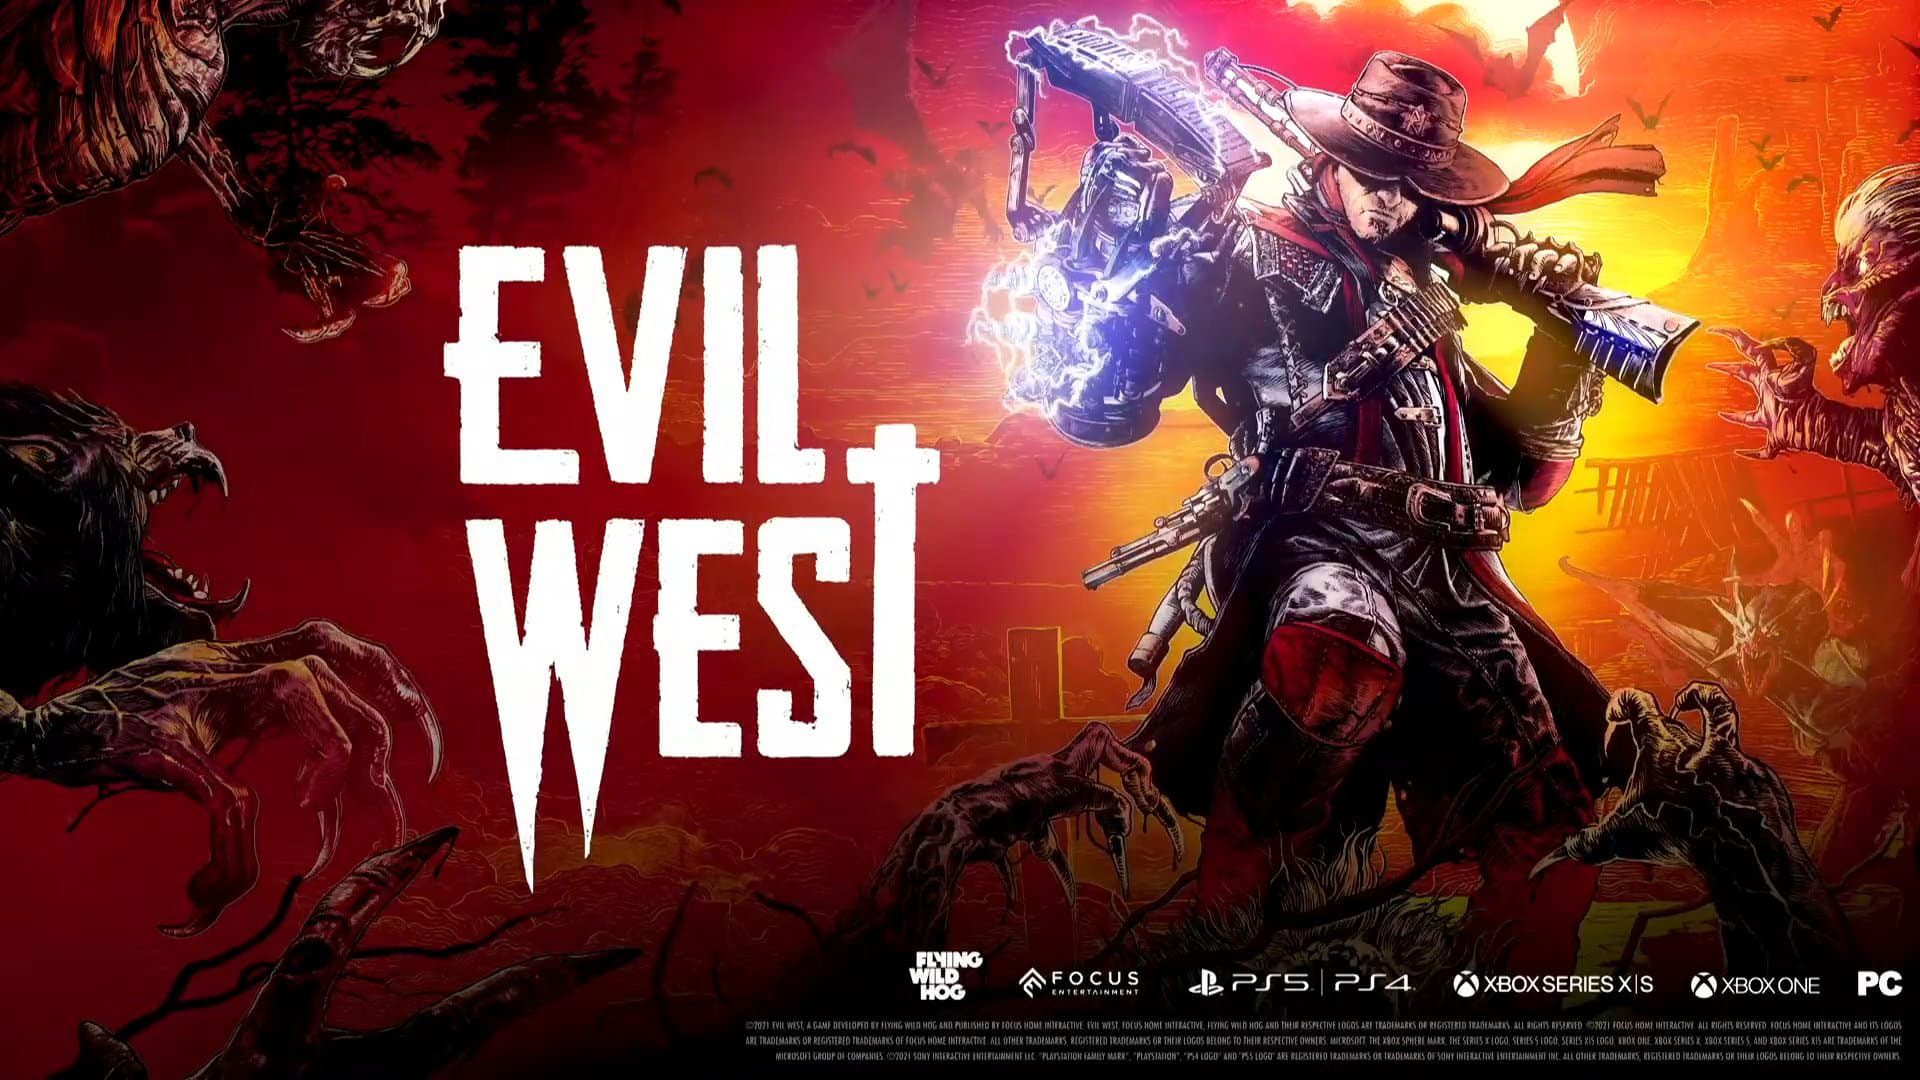 Evil West Gameplay Reveal Trailer Showcases Brutal Action